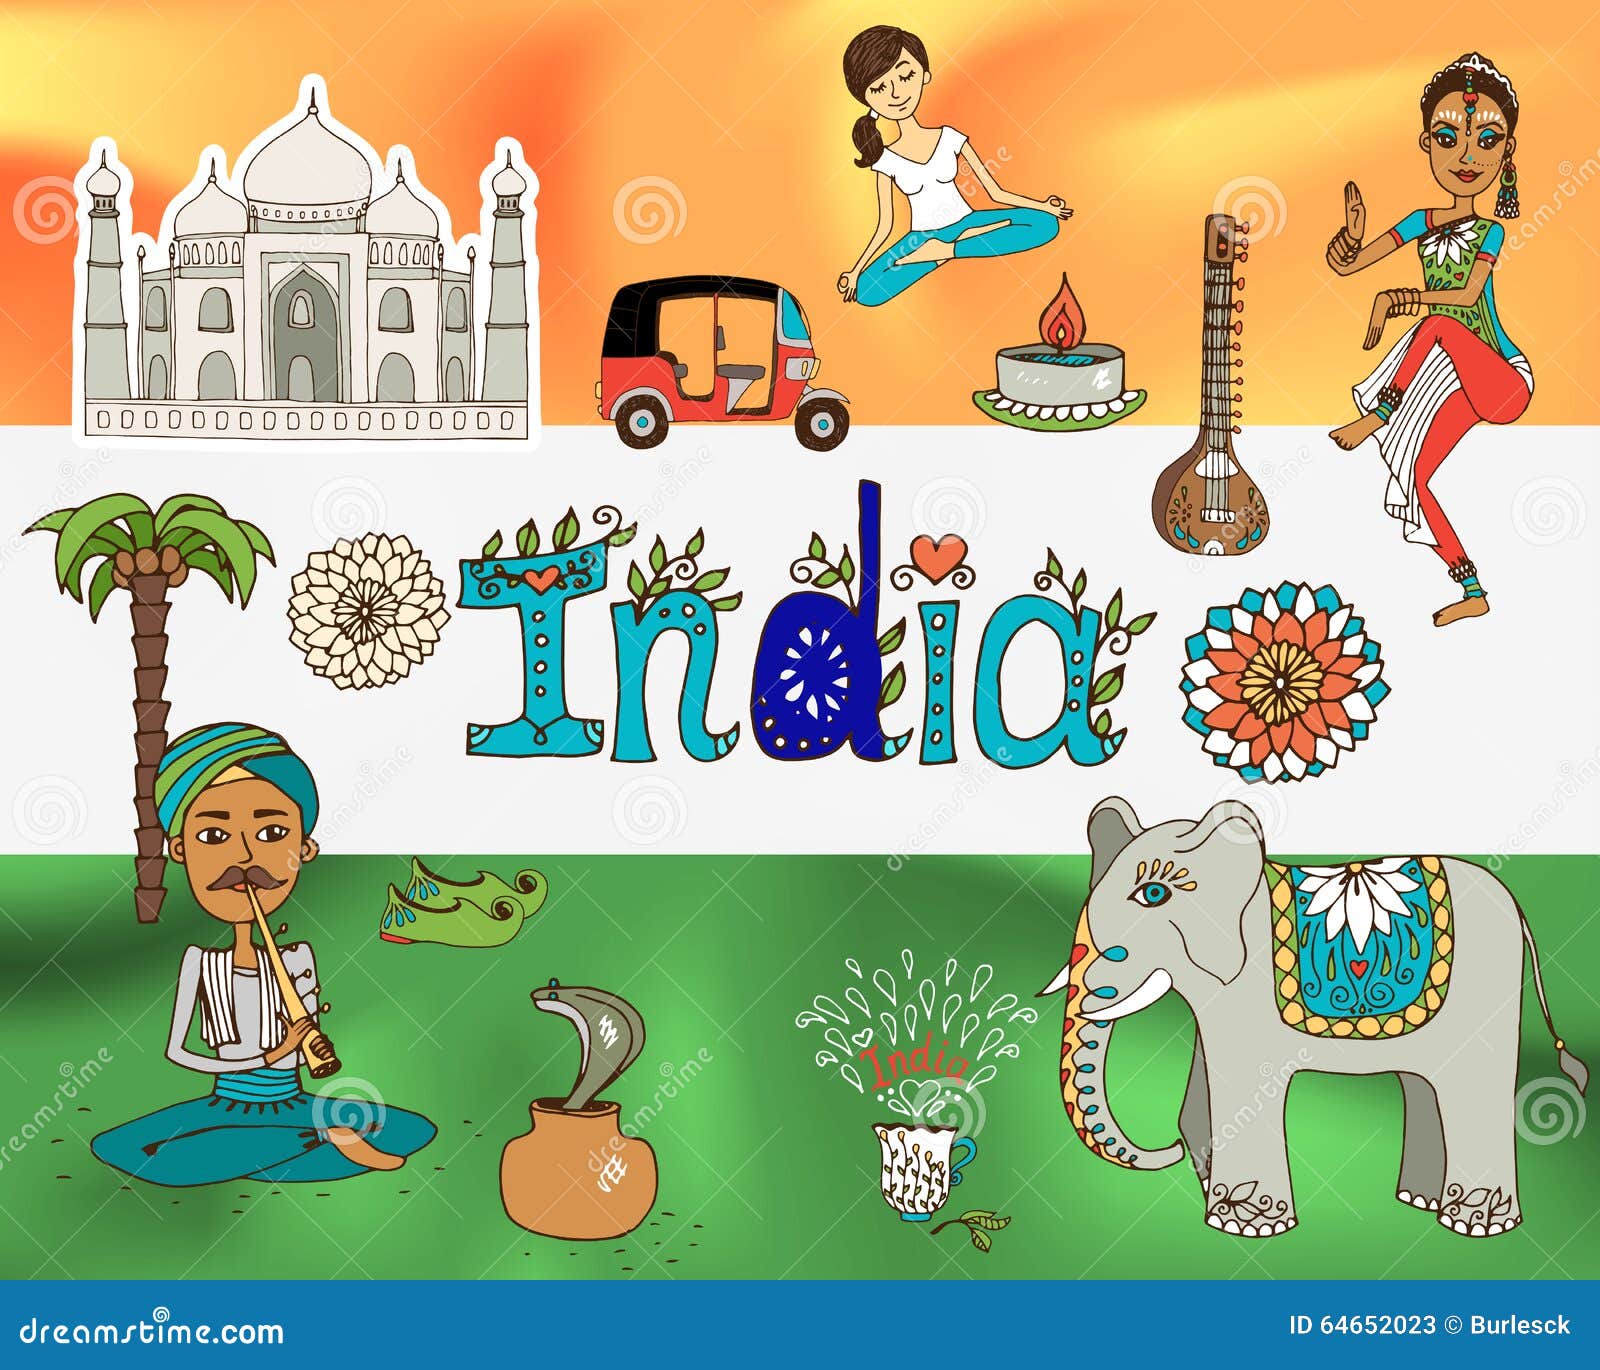 india clip art free download - photo #42